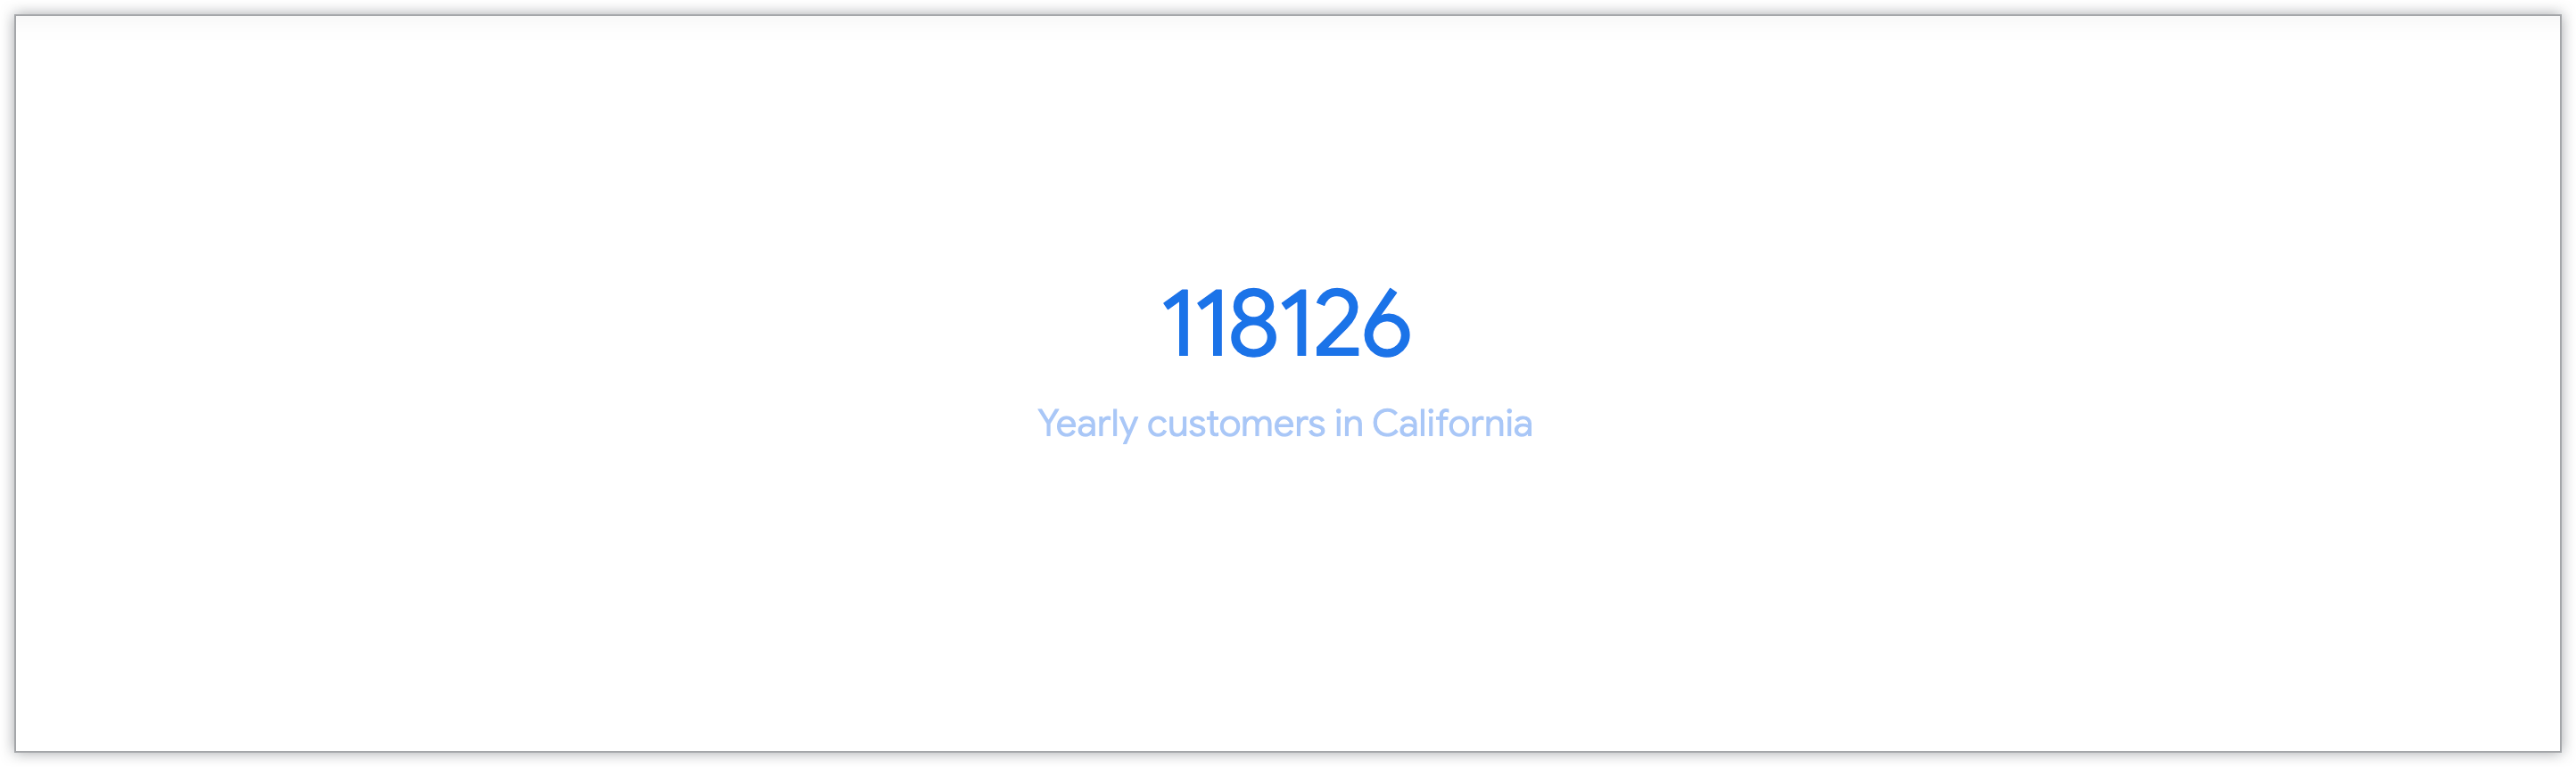 Diagram nilai tunggal yang menampilkan jumlah pelanggan tahunan dari California.